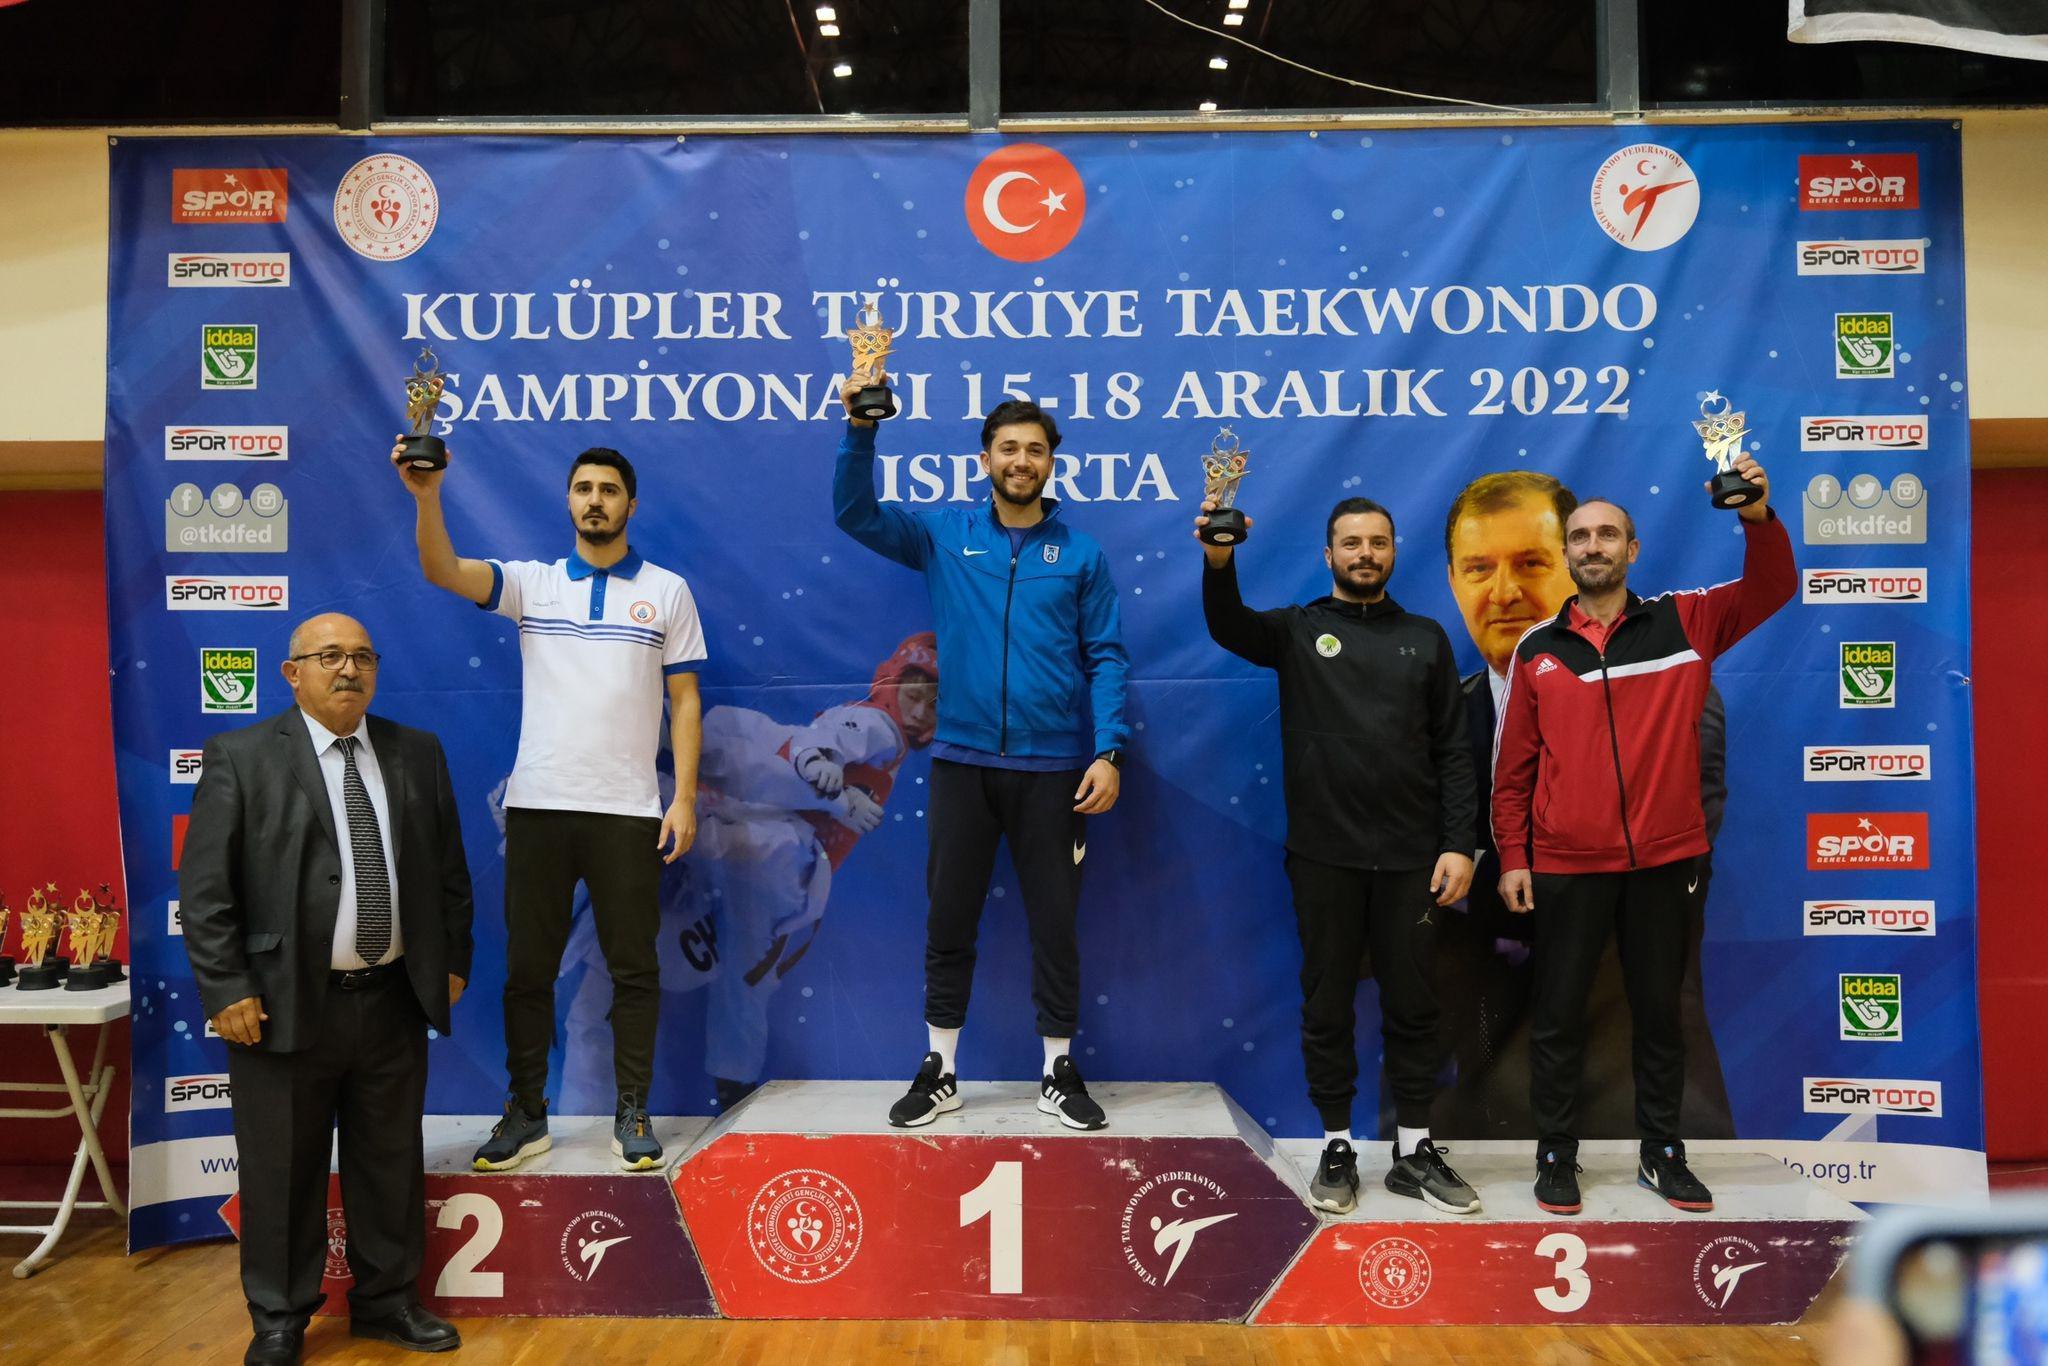 abb sporculari turkiye taekwondo sampiyonasinda 5 madalya kazandi